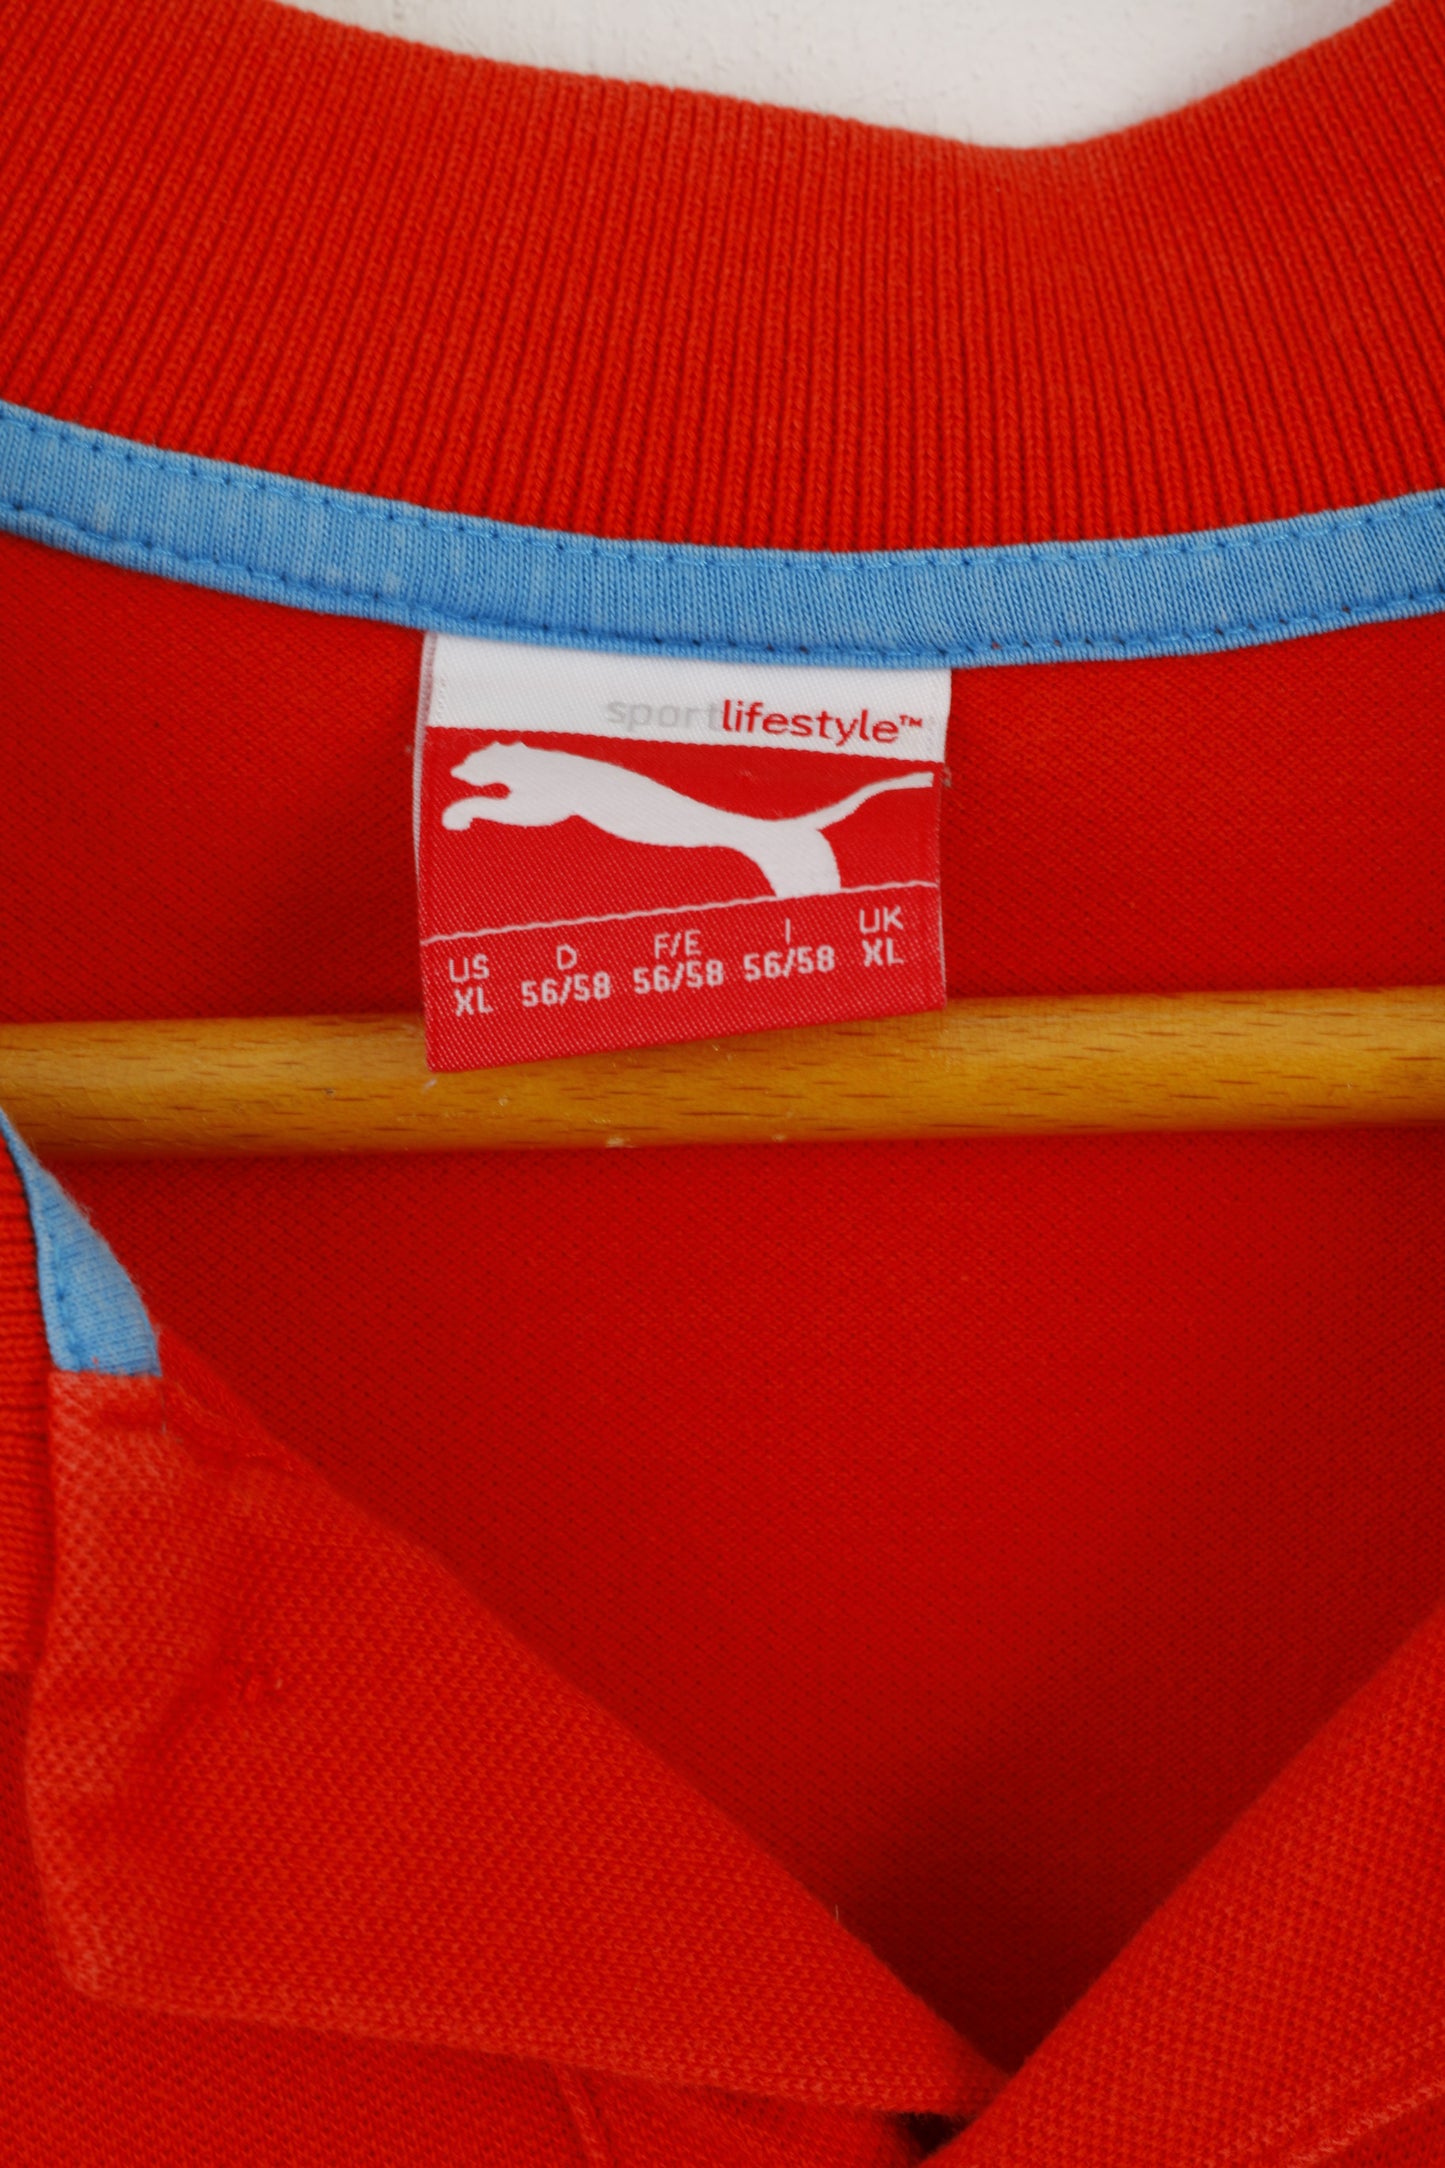 Puma Men XL Polo Shirt Orange Short Sleeve Cotton Stretch Sport Top